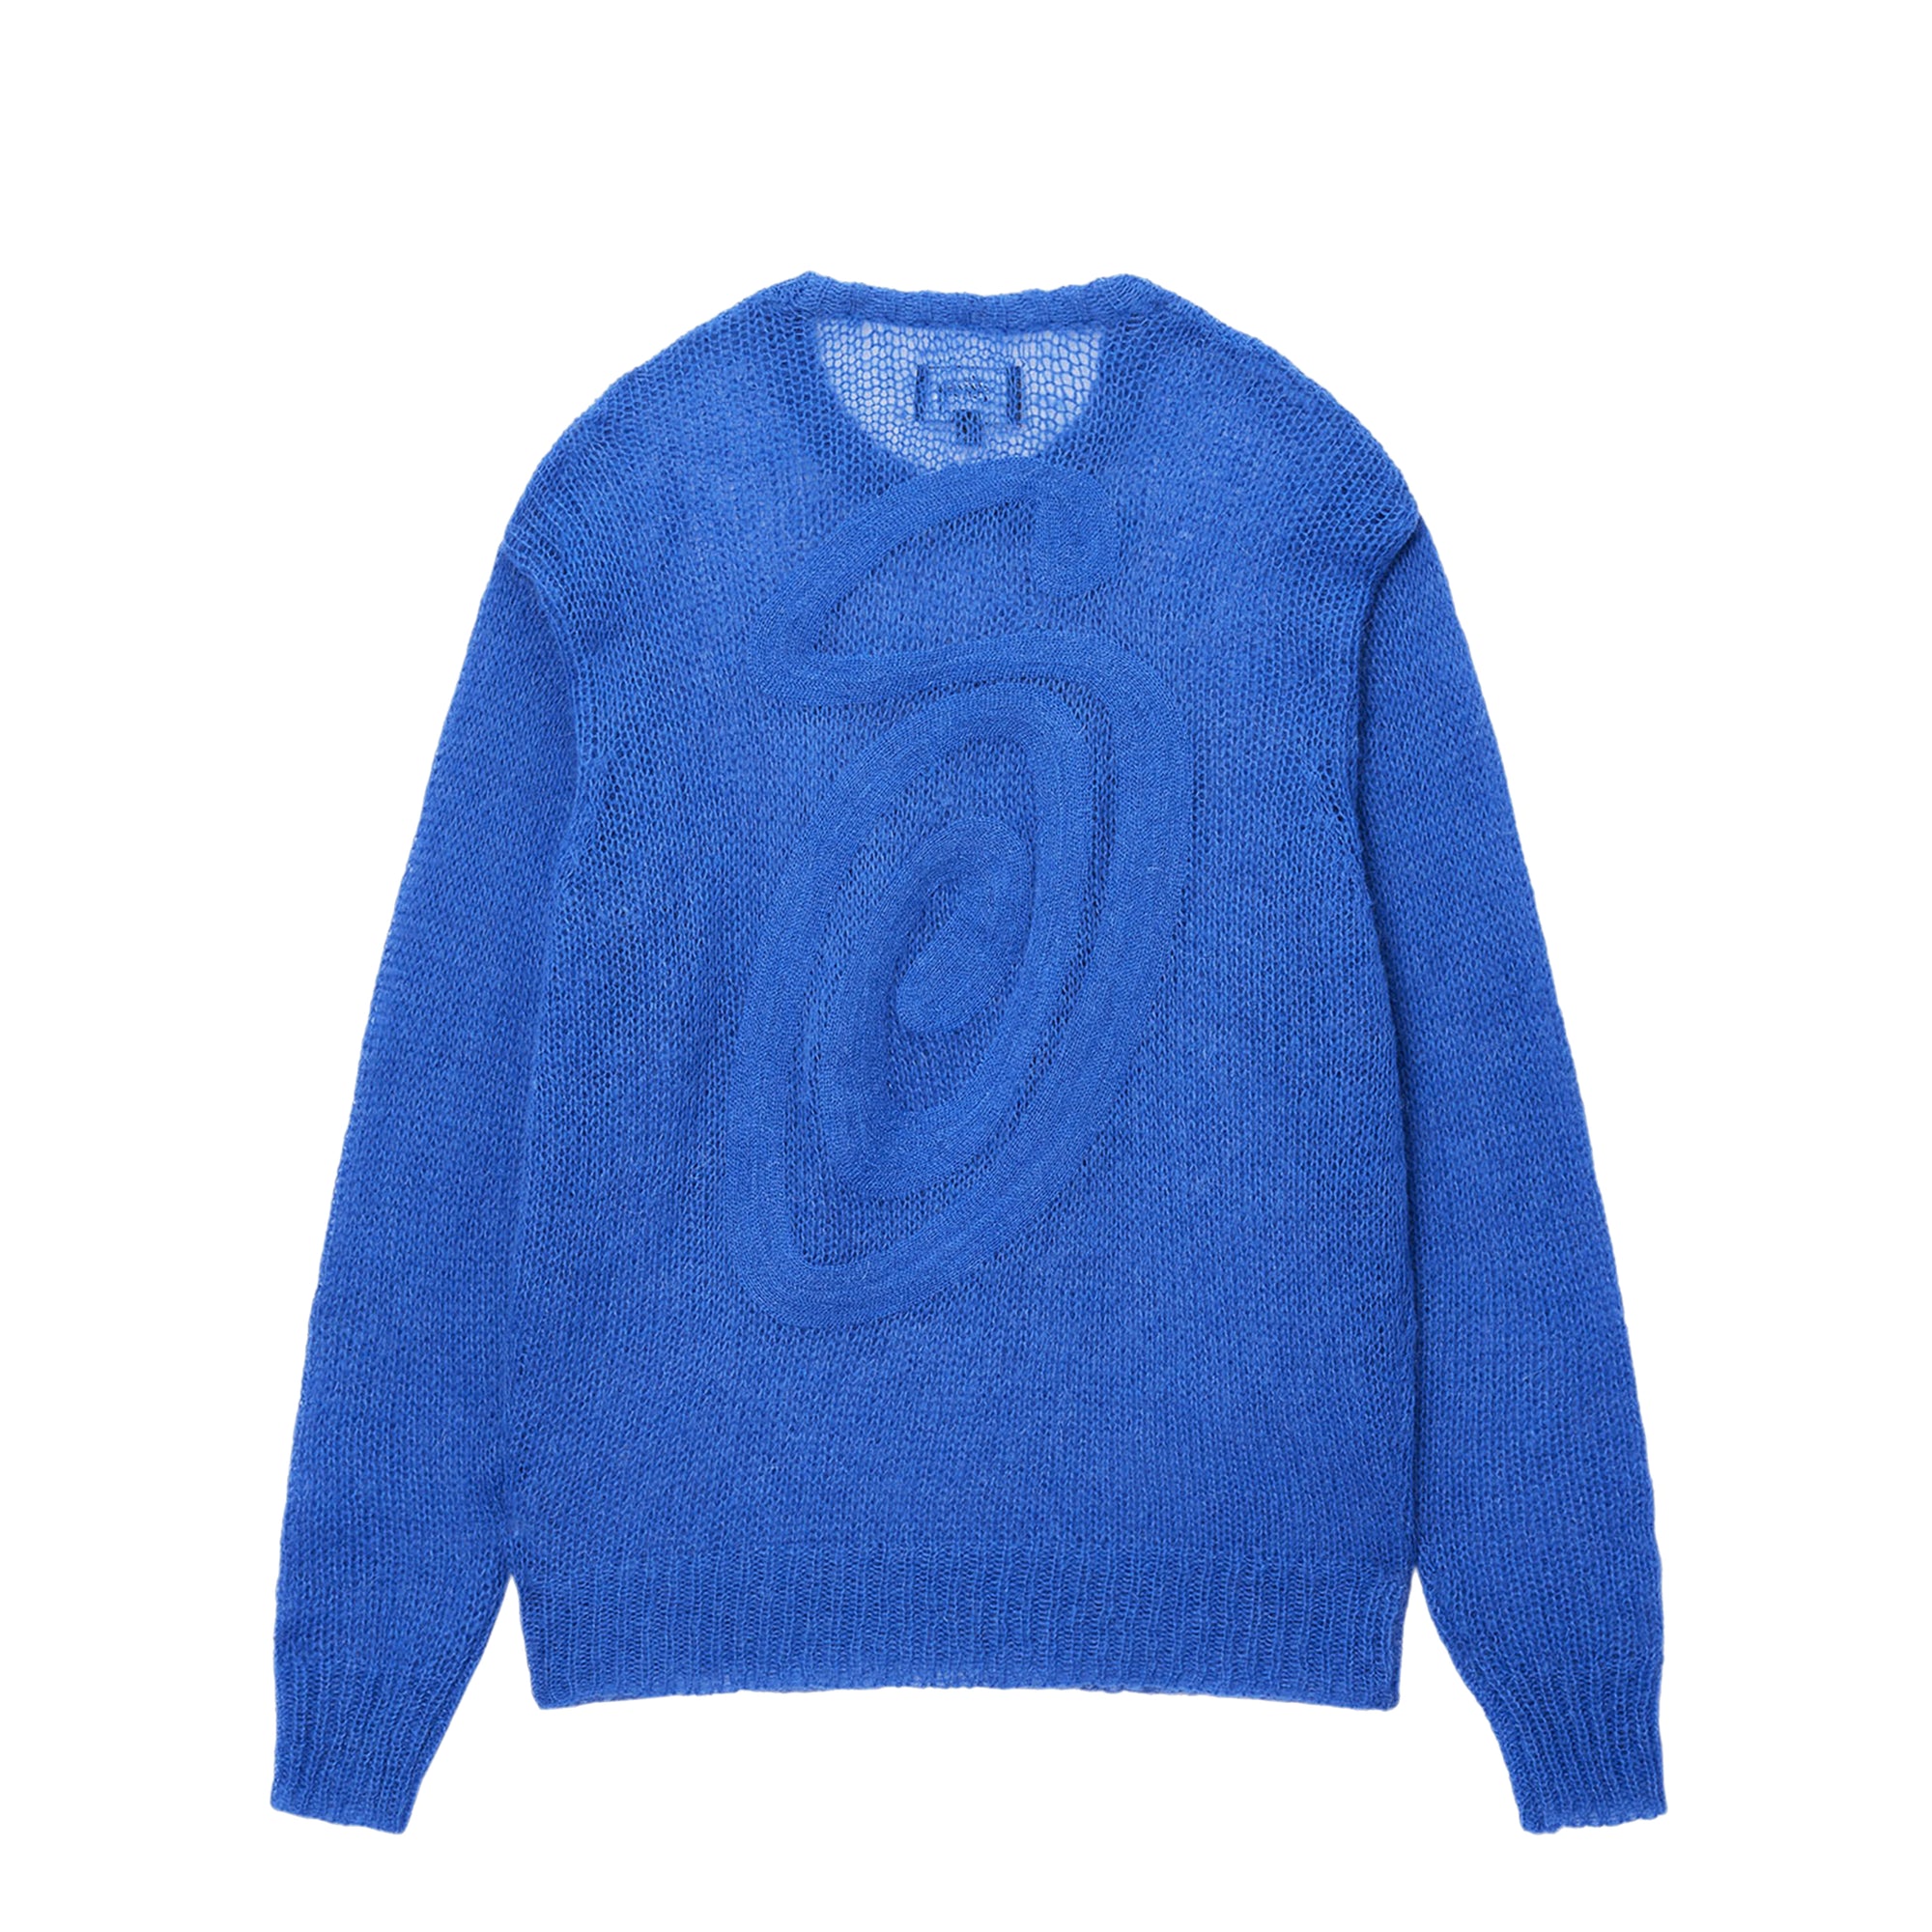 Stüssy - Men's S Loose Knit Sweater - (Blue) view 2